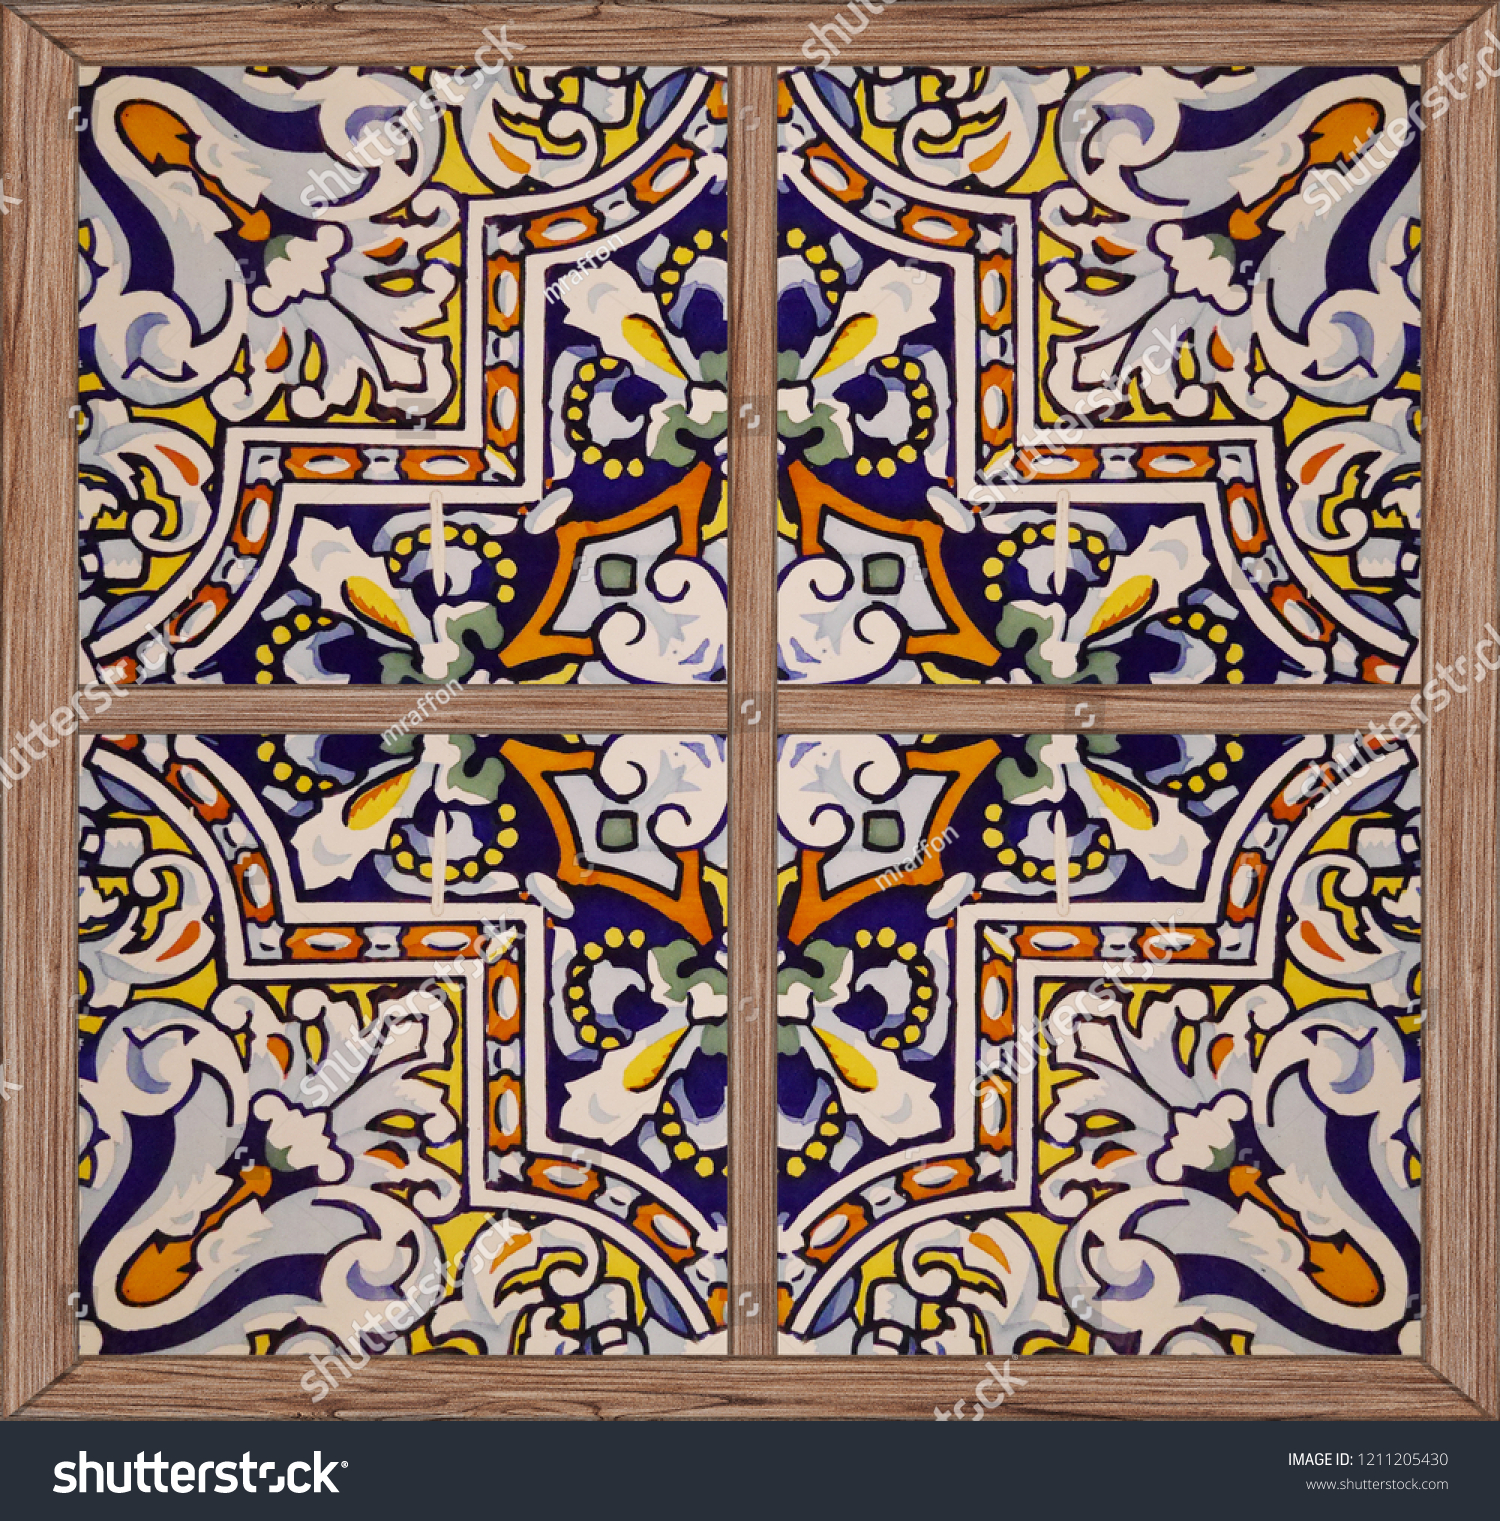 Tile design on floor. Tile with patterned.  Tile decorated insert. #1211205430